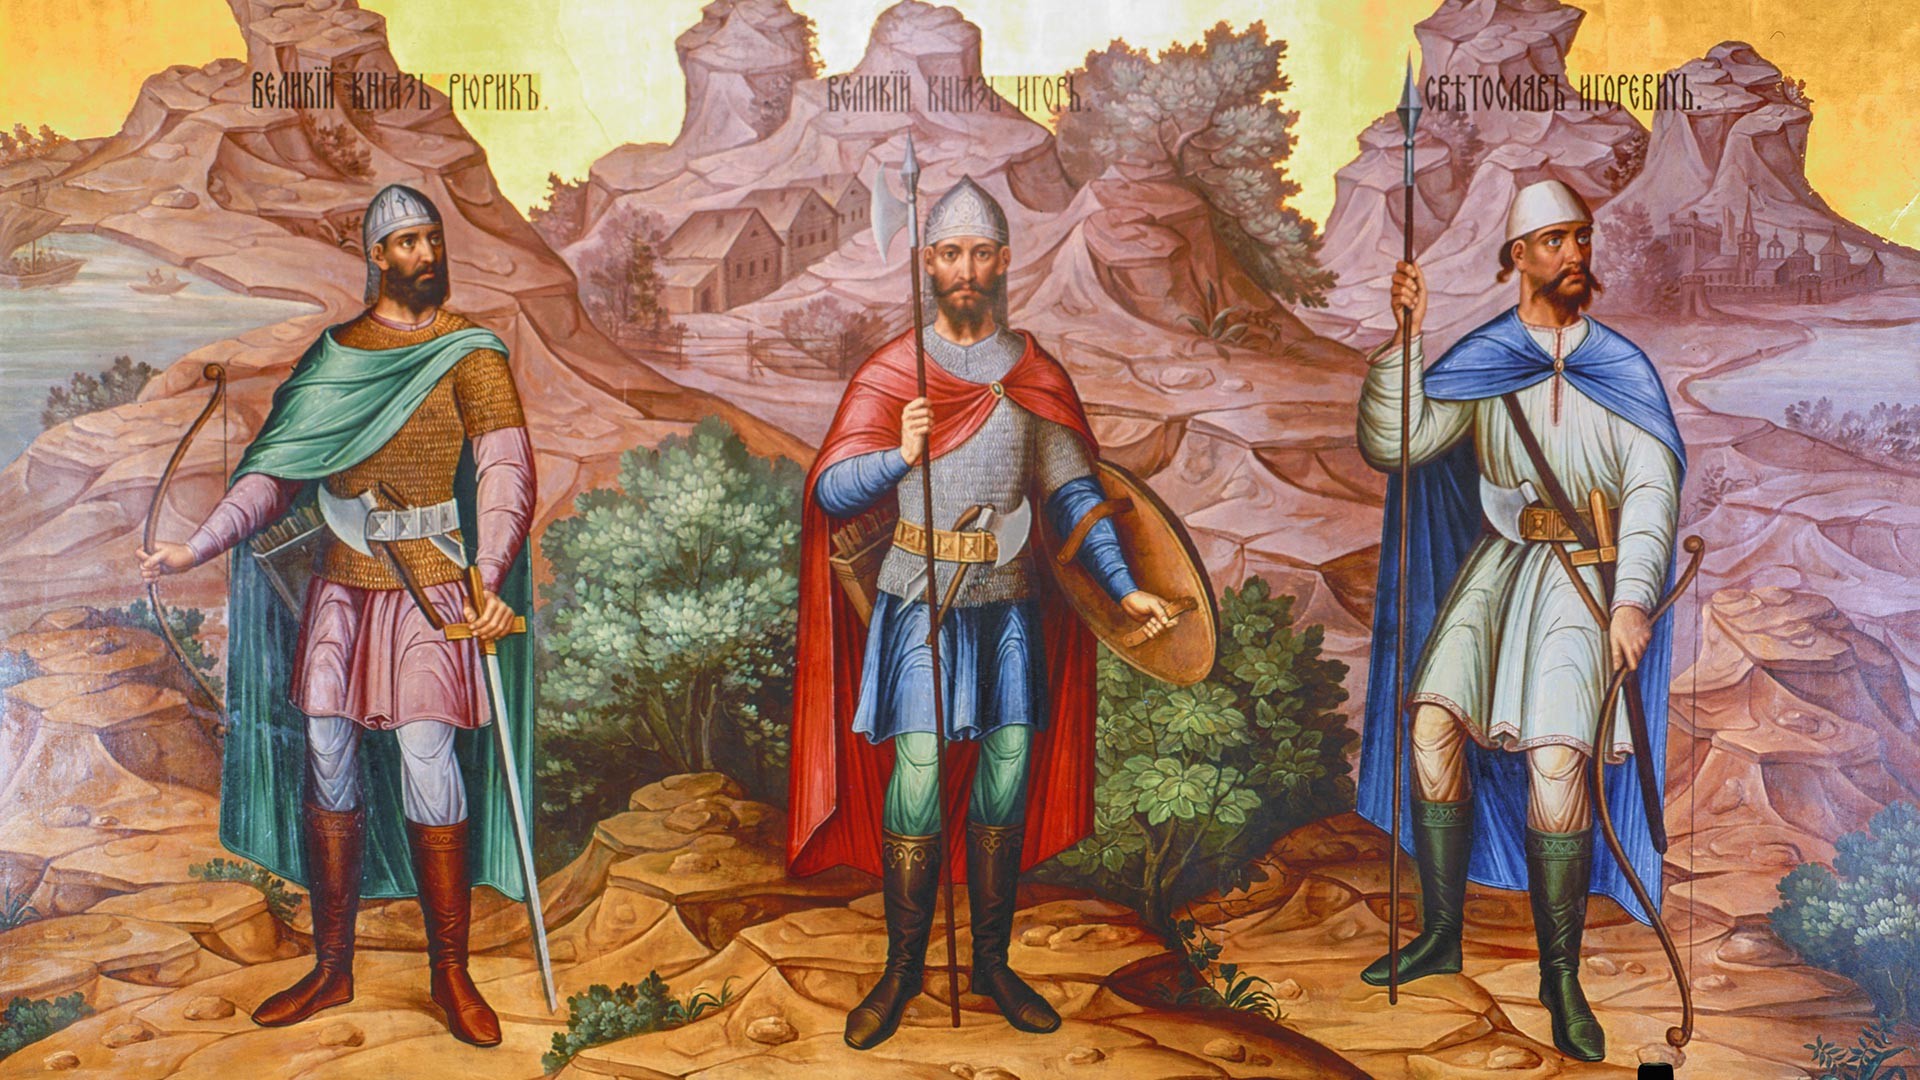 Dari kiri ke kanan: Adipati Agung Rurik, Adipati Agung Igor, Adipati Igor Svyatoslavovich. Sebuah fragmen mural. Granovitaya Palata, Kremlin Moskow.